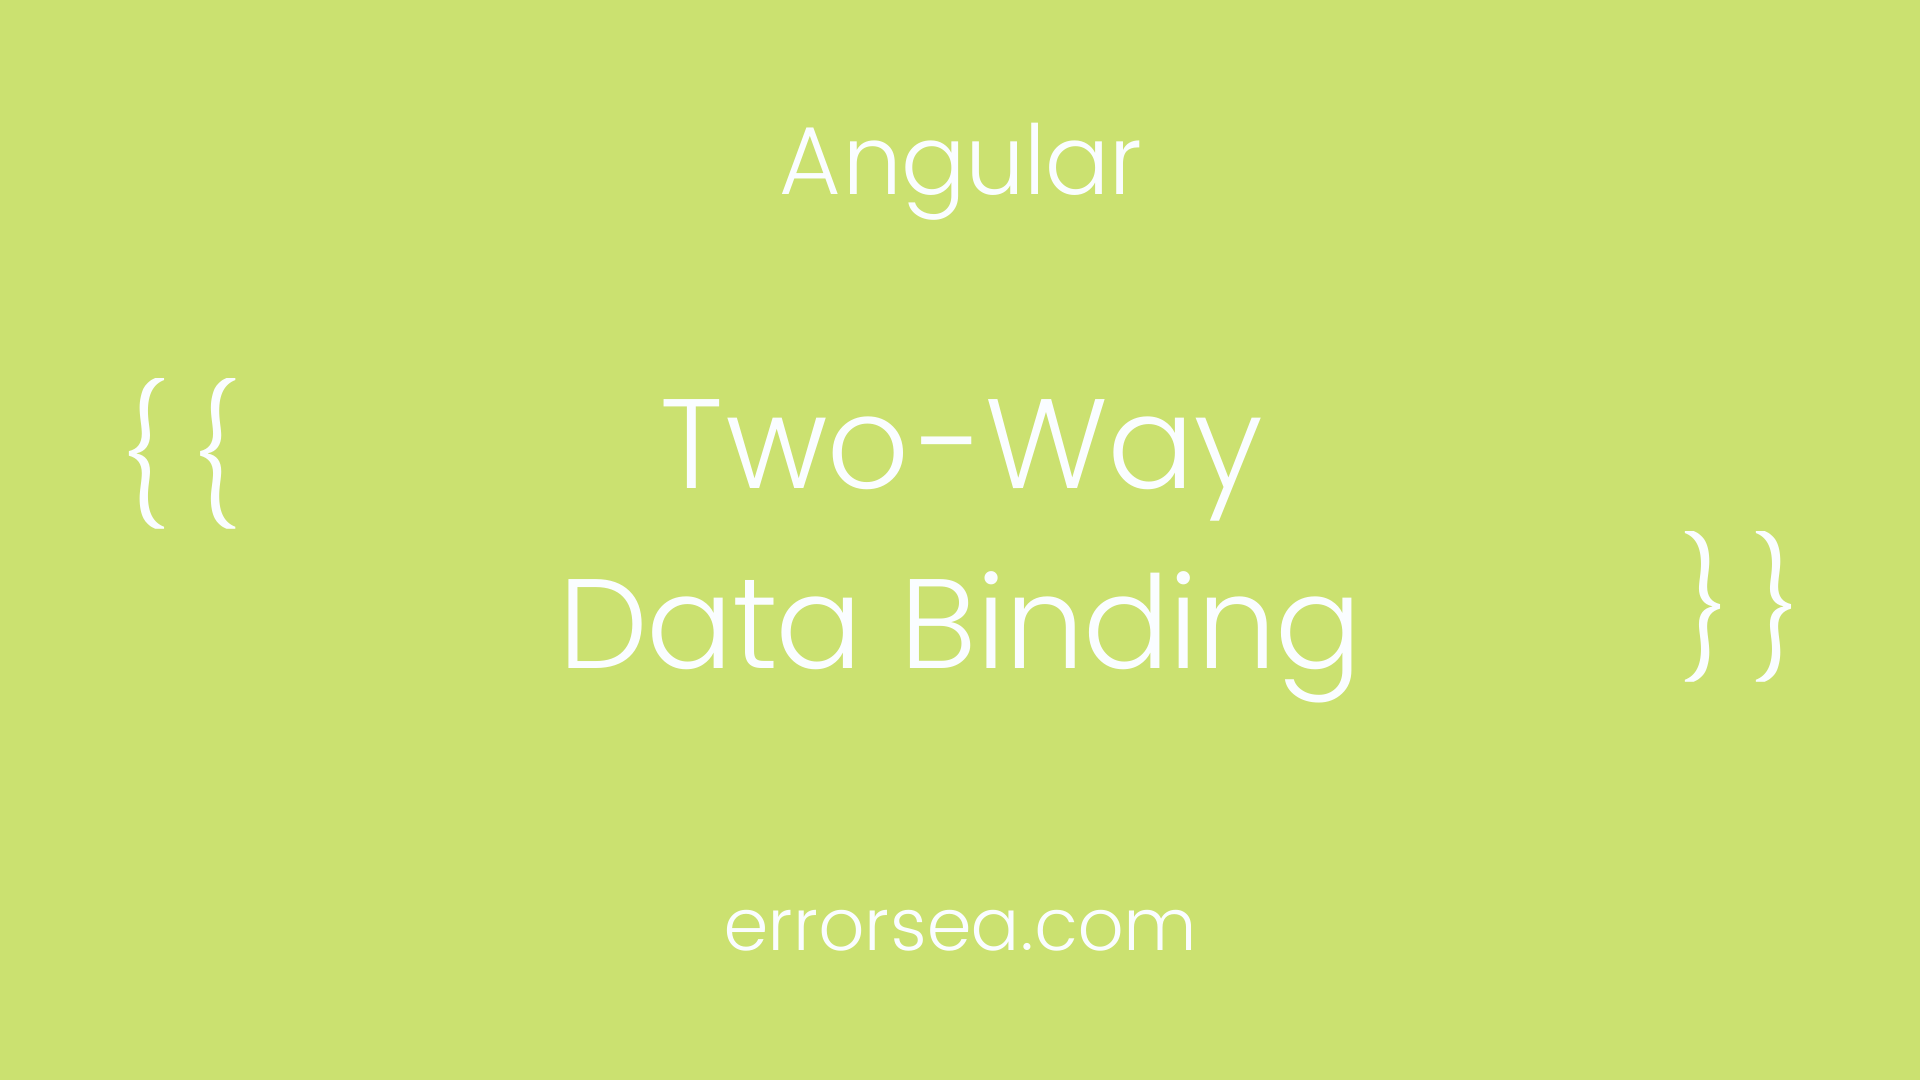 Angular Two-way Data Binding